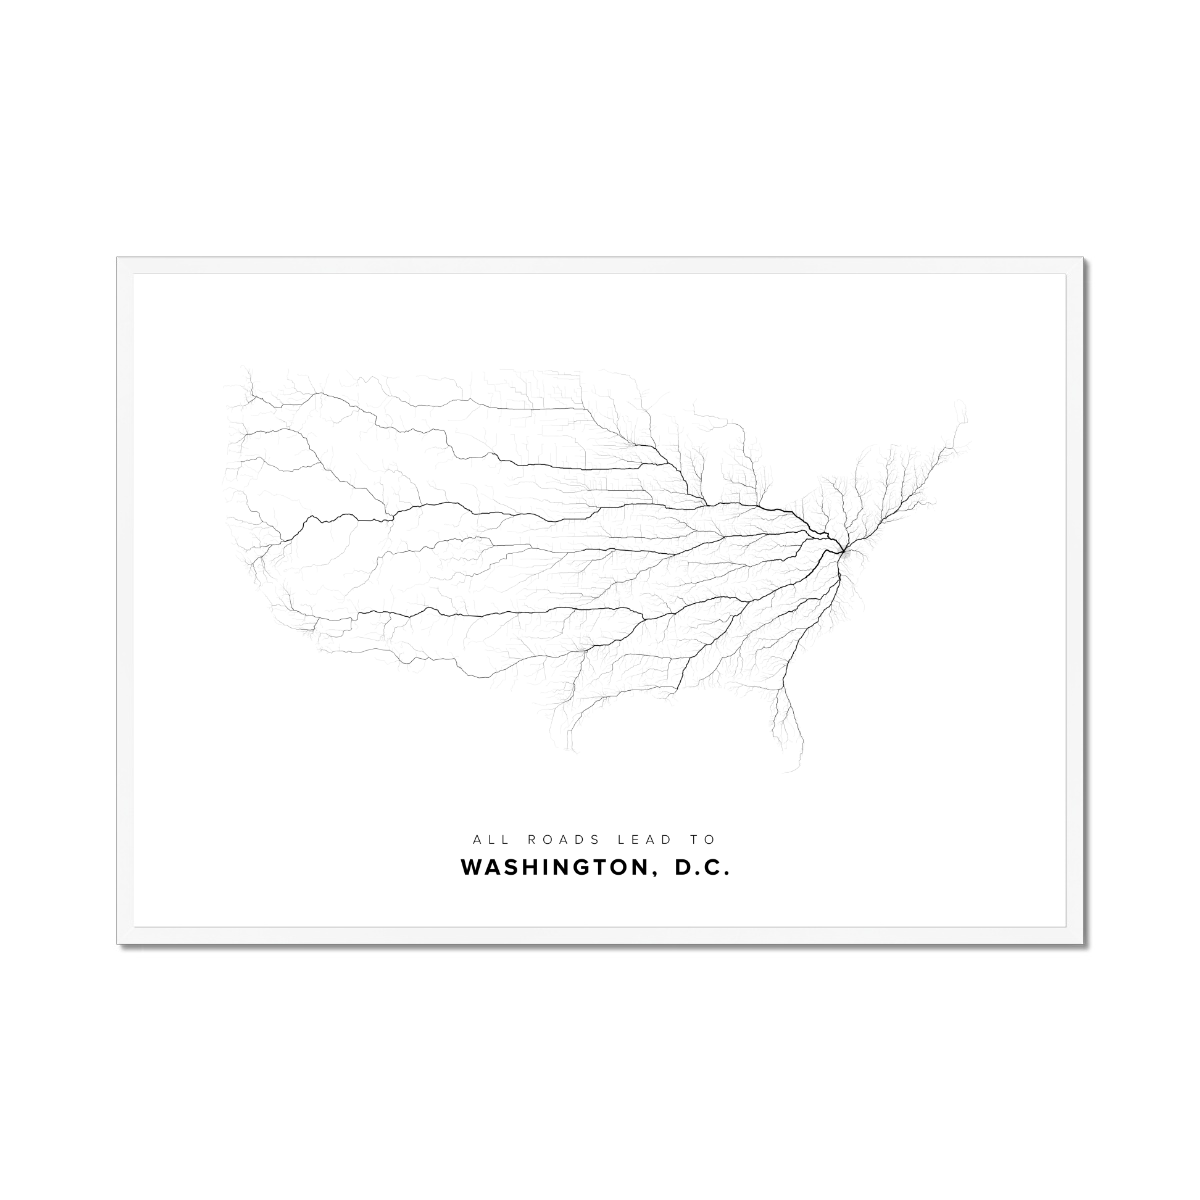 All roads lead to Washington, D.C. (United States of America) Fine Art Map Print